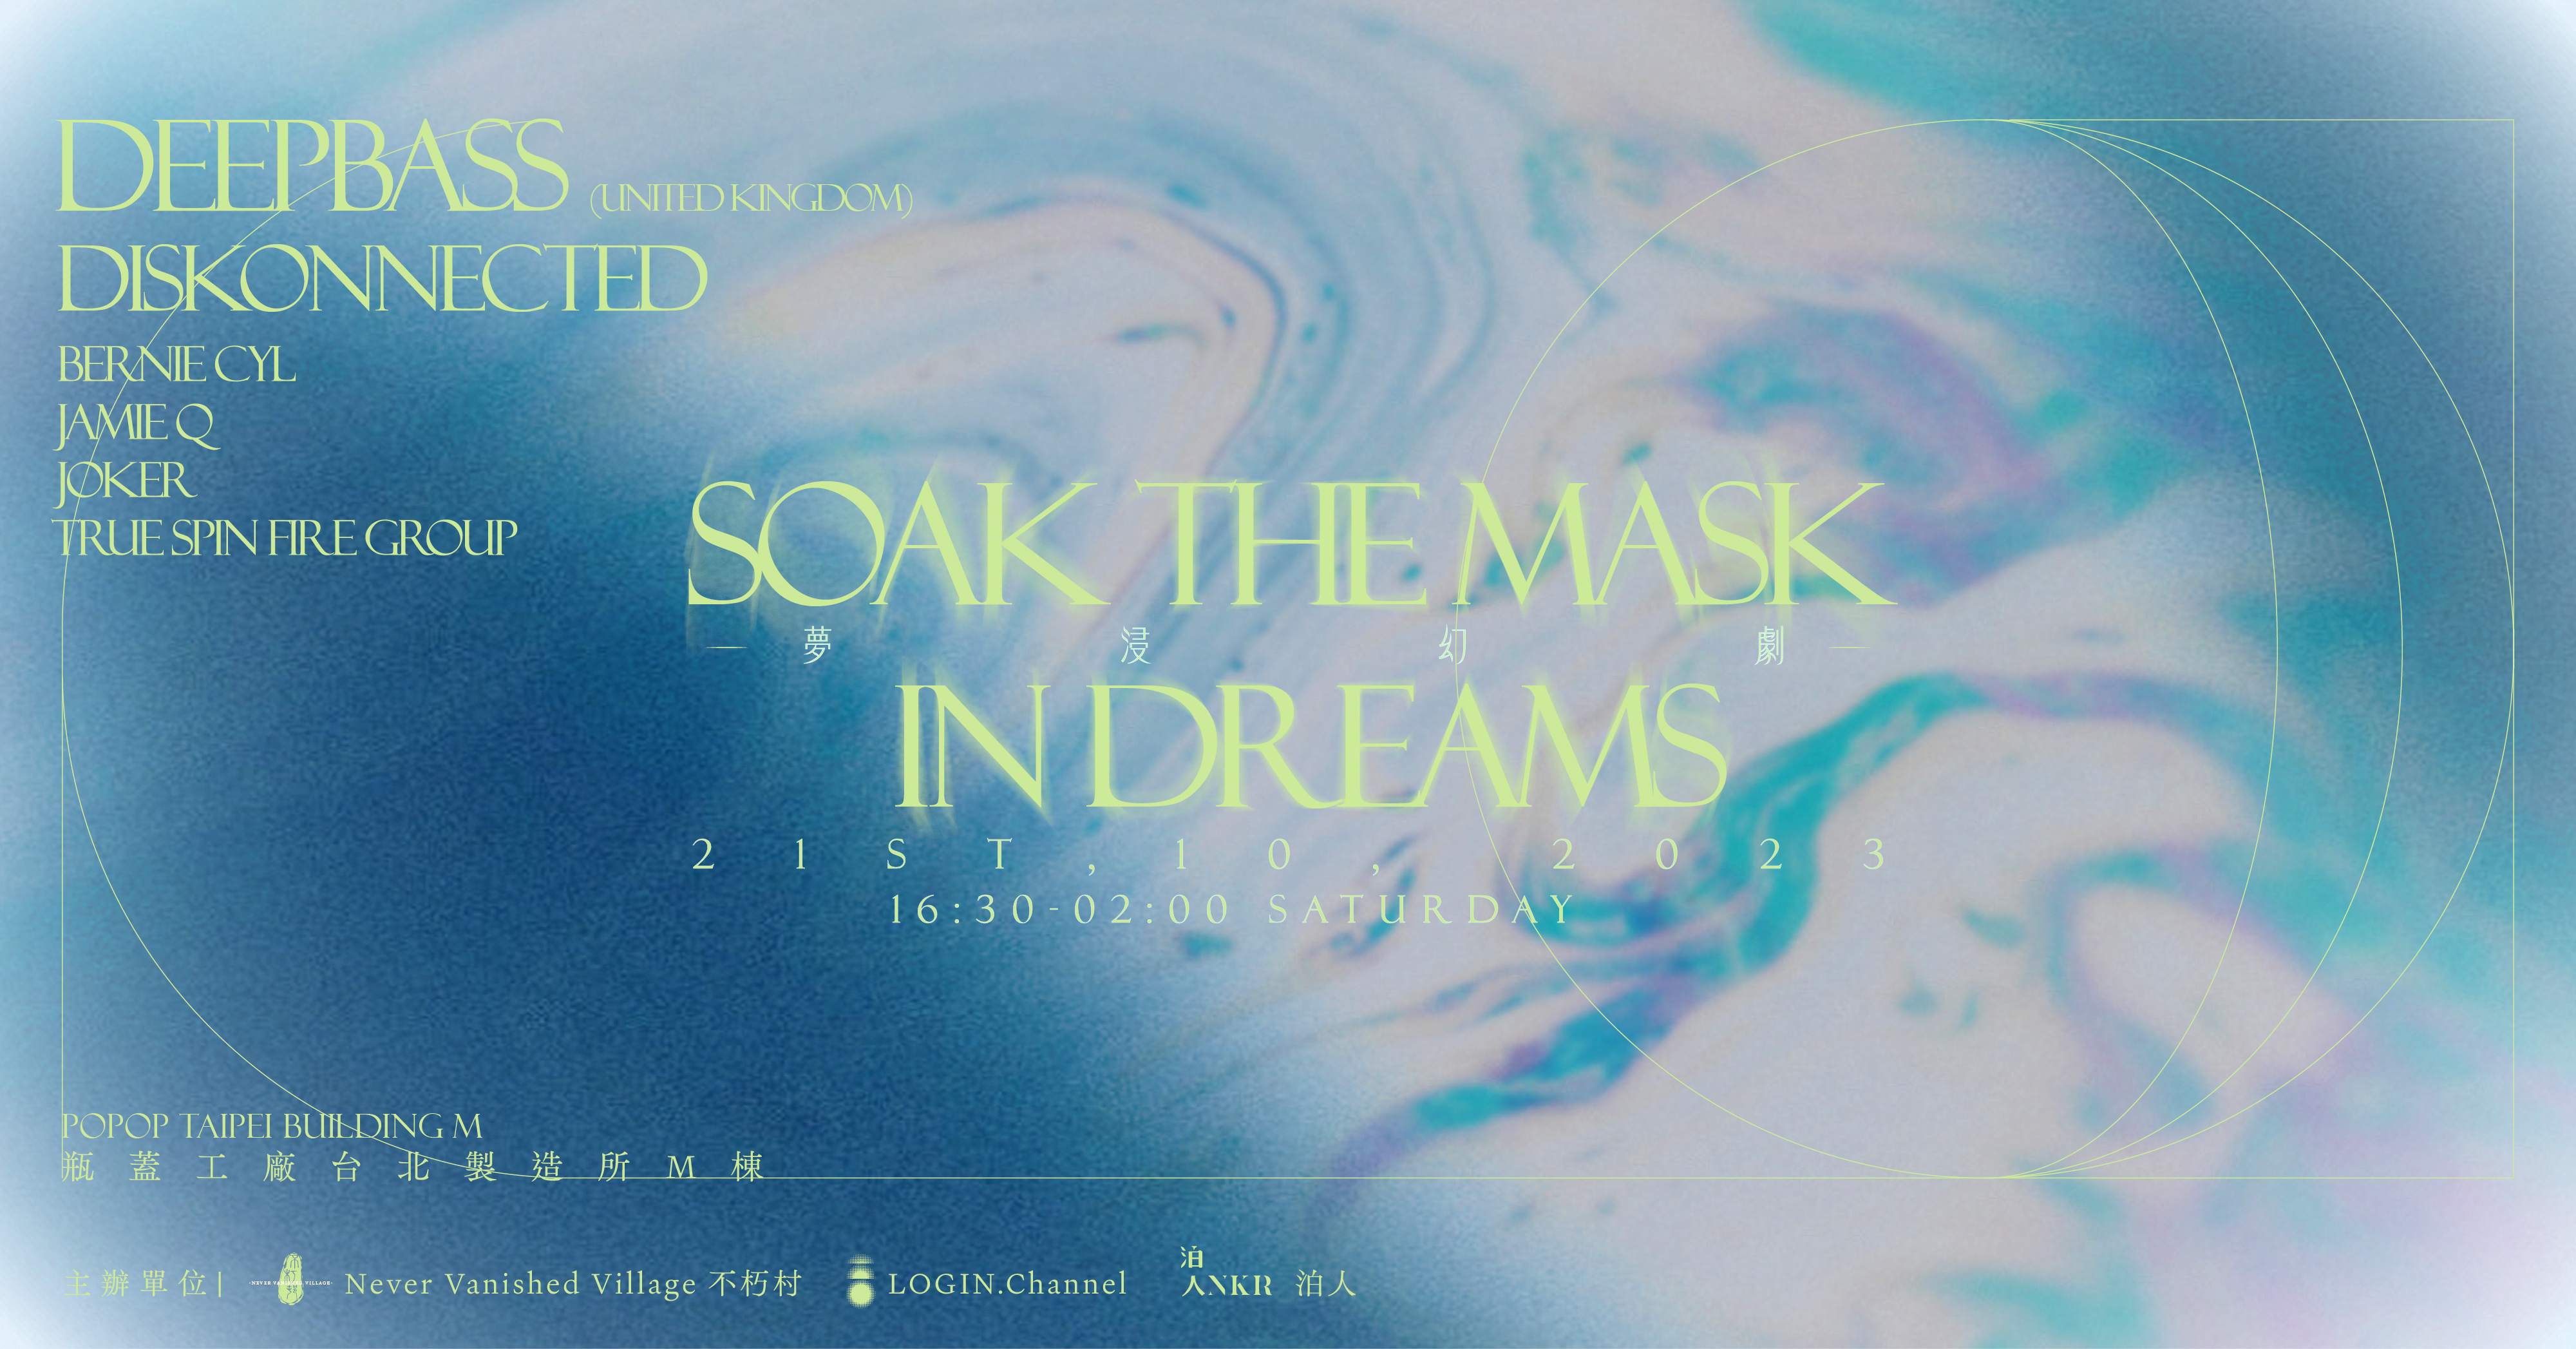 Deepbass - Soak The Mask in Dreams - 夢浸幻劇 - フライヤー裏